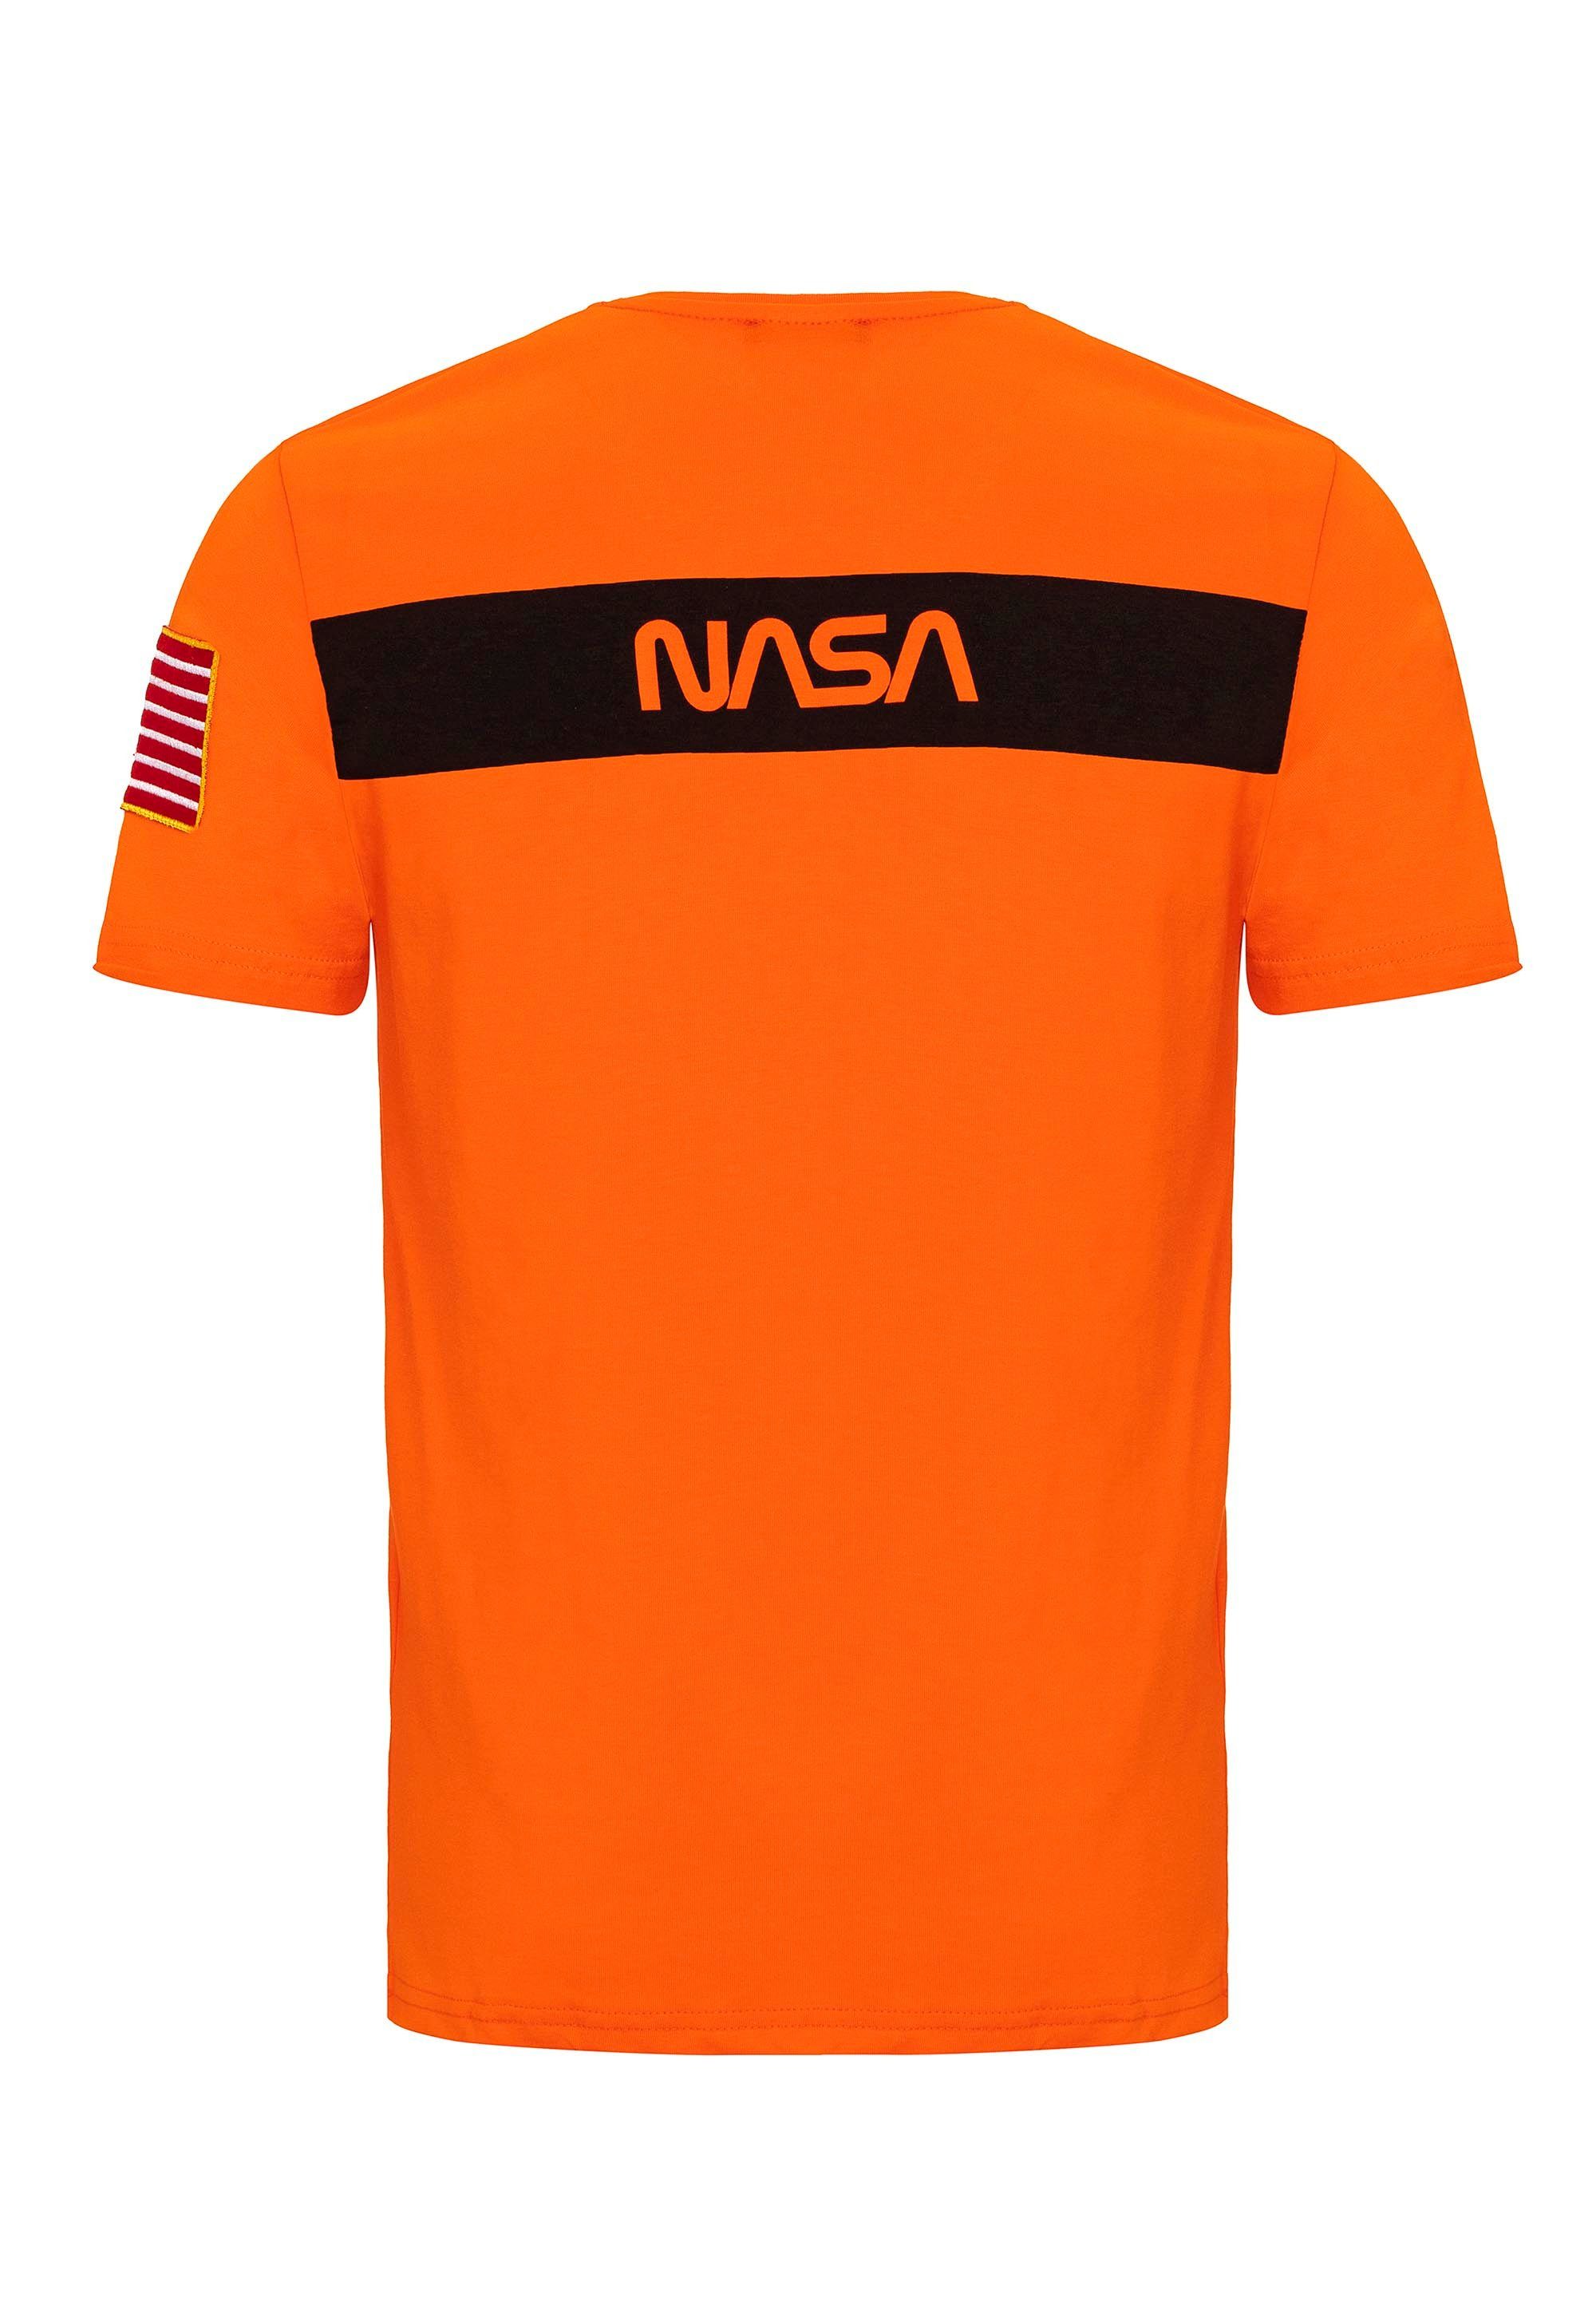 RedBridge Tucson mit gesticktem T-Shirt NASA-Design orange